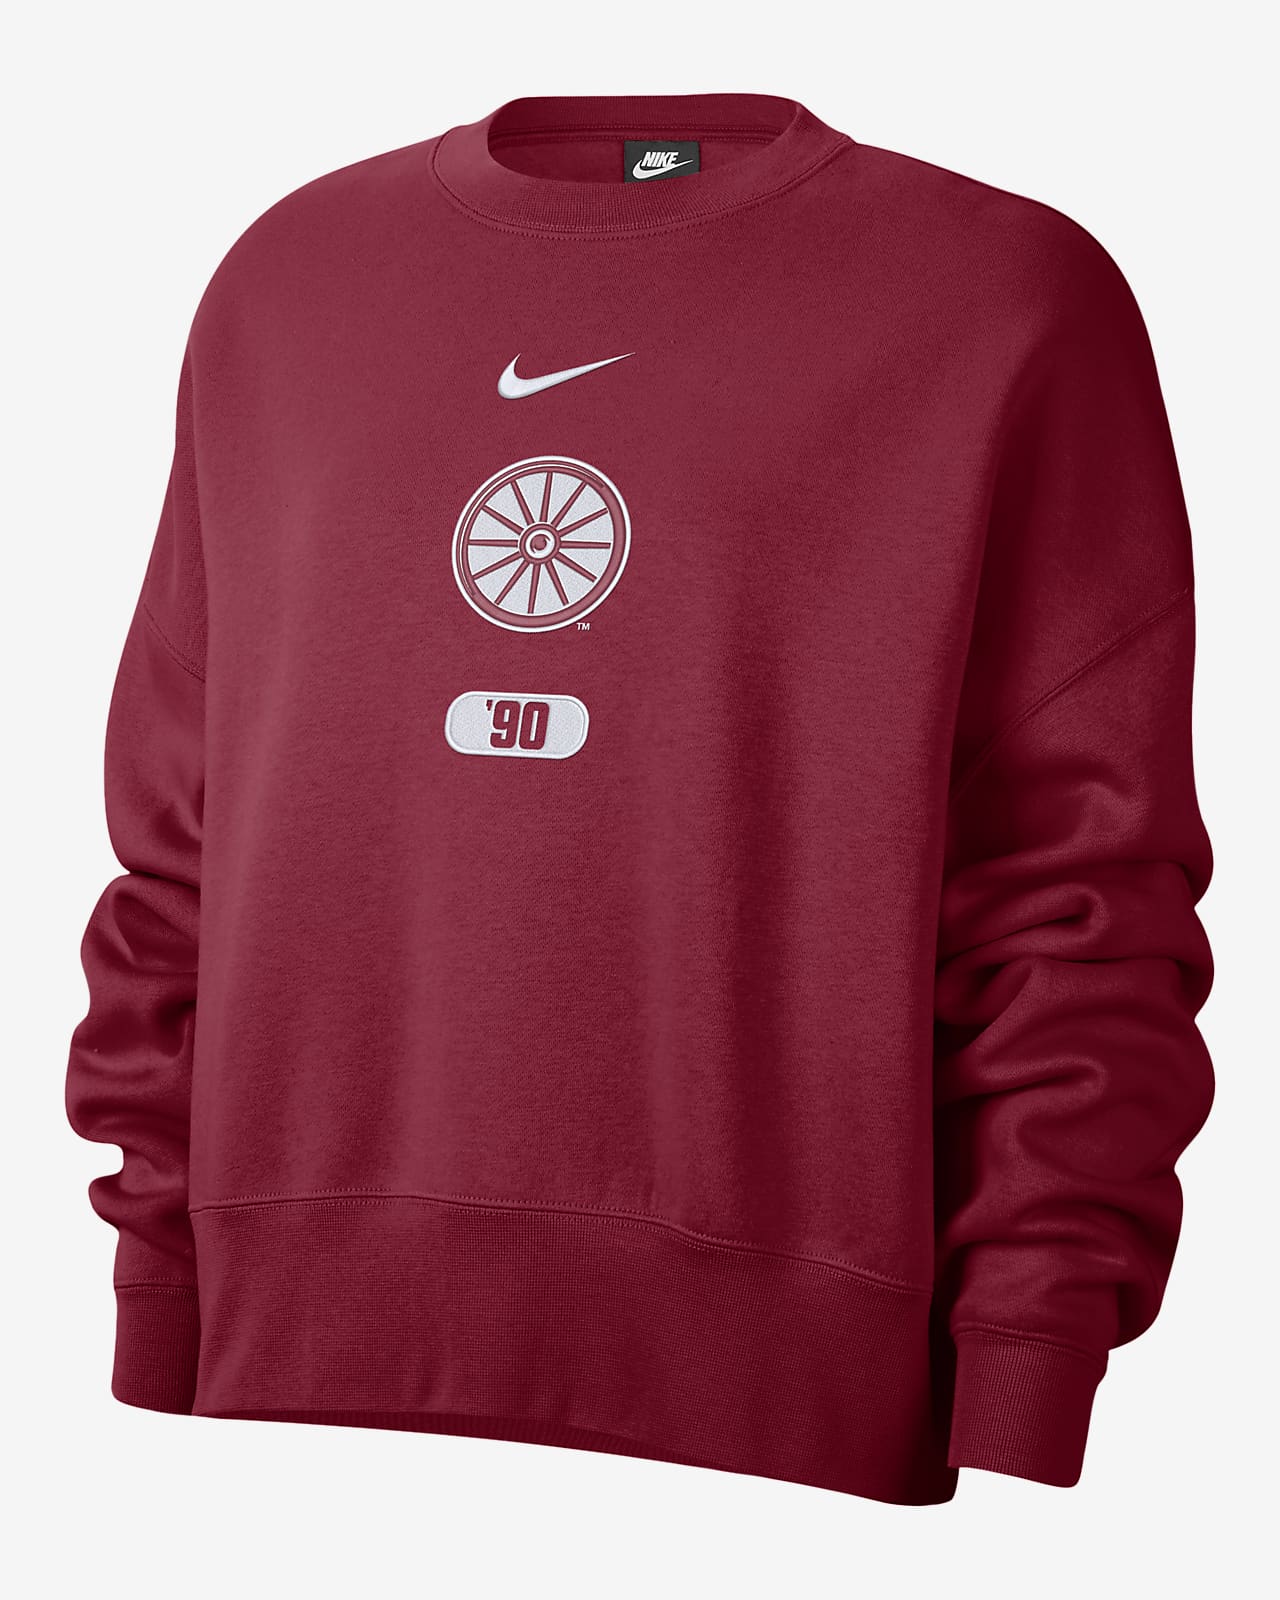 Sentido táctil orientación Araña de tela en embudo Oklahoma Women's Nike College Crew-Neck Sweatshirt. Nike.com